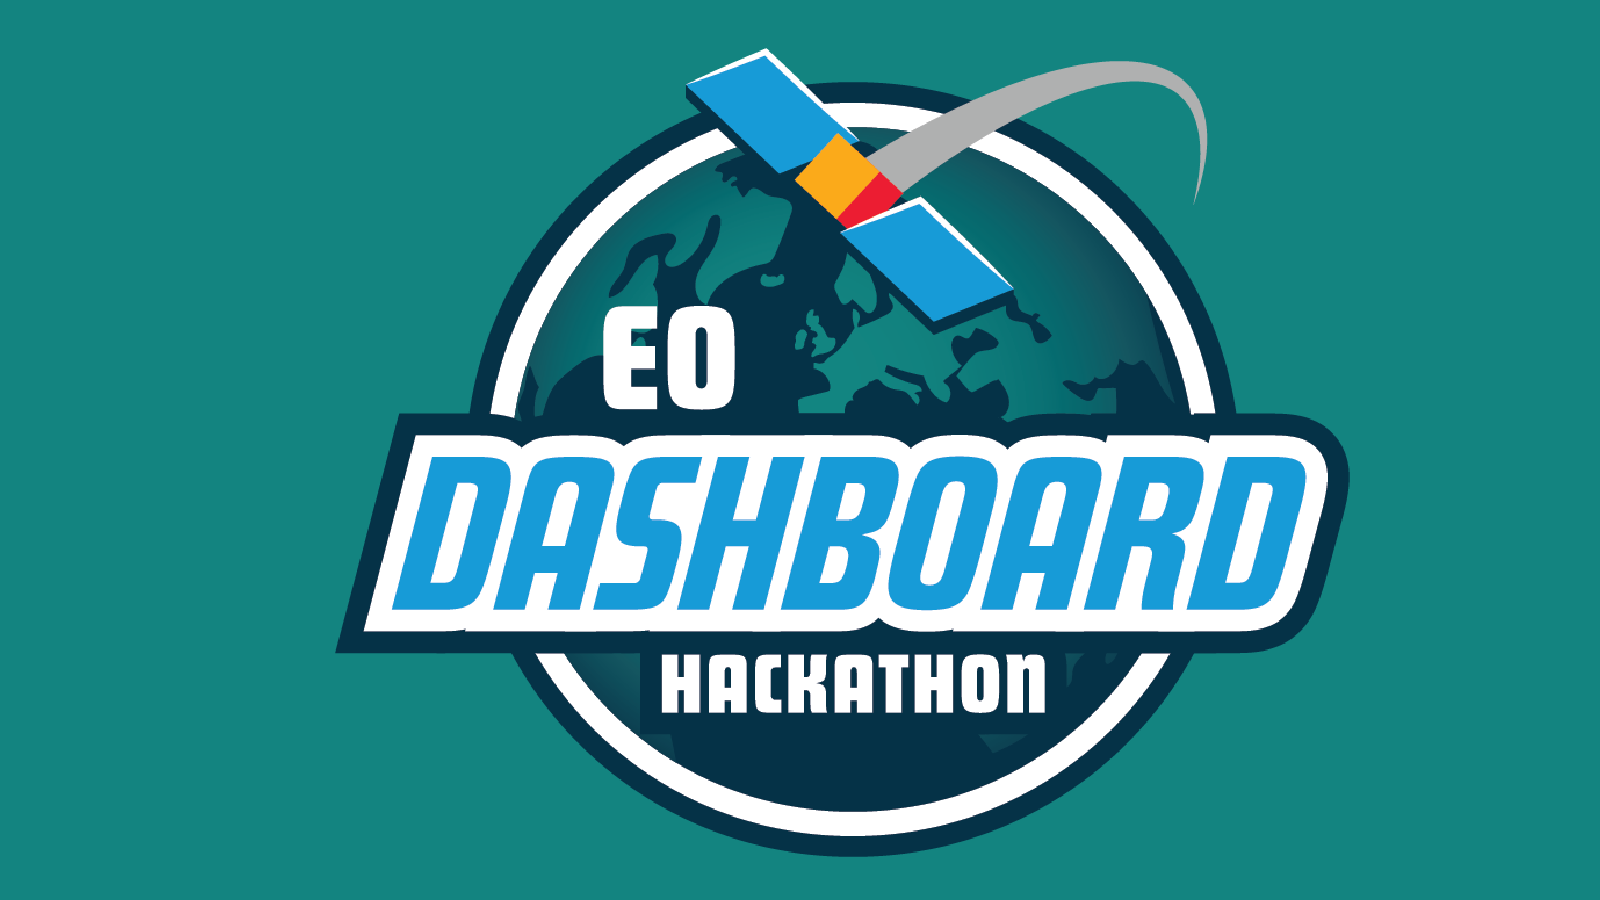 Hackathon Event Logo